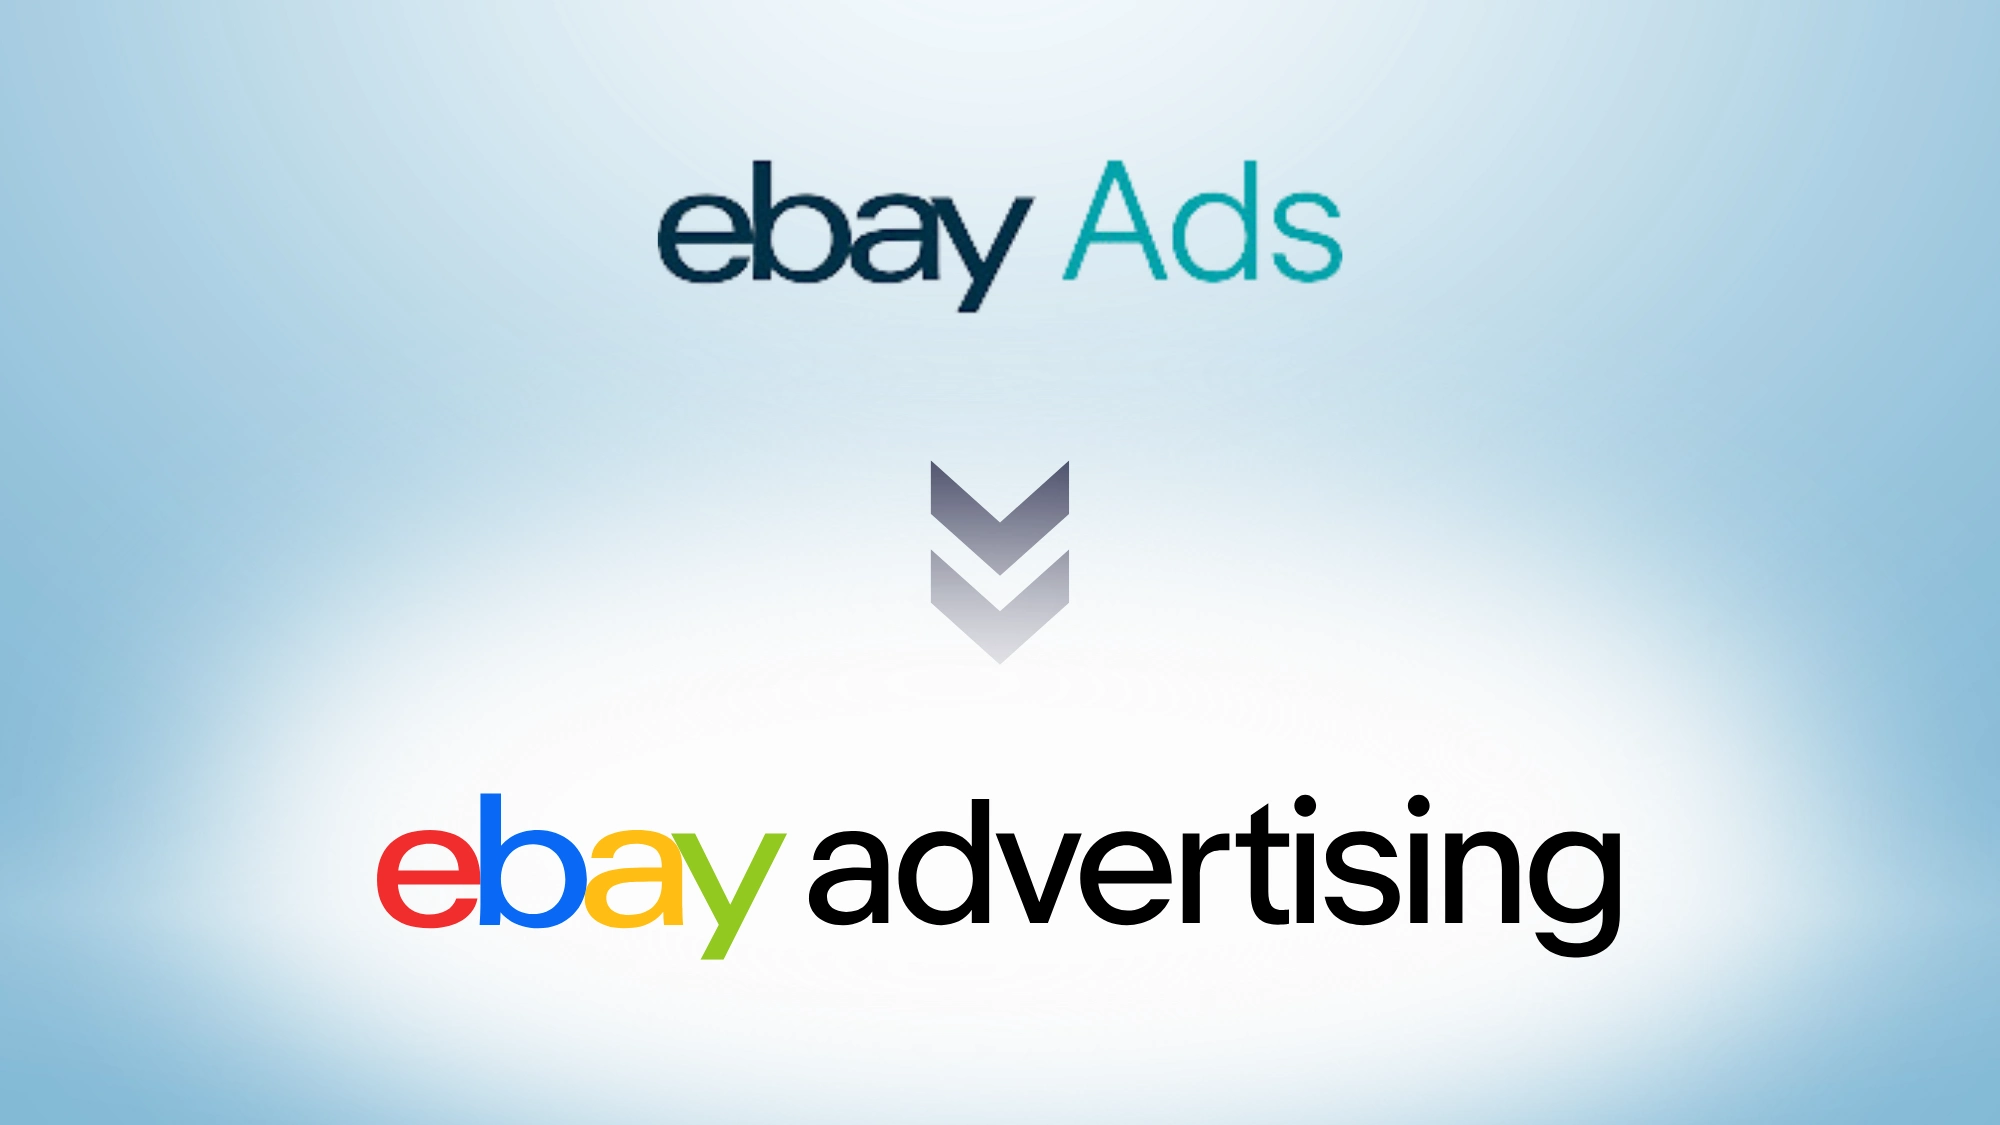 ebay ads is now ebay advertising